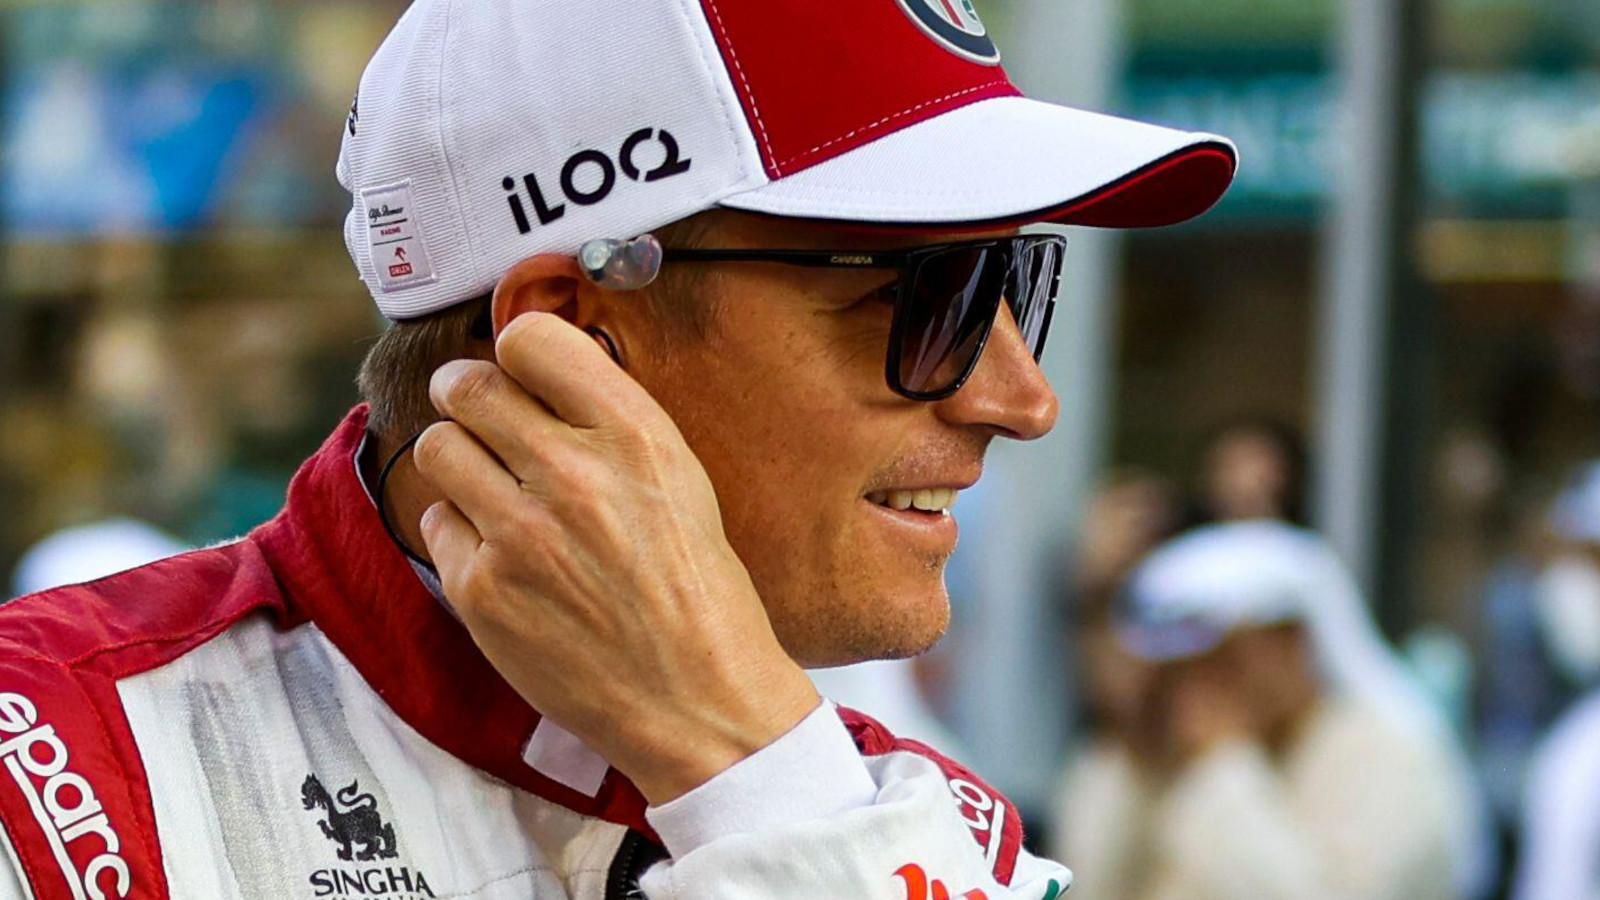 Kimi Raikkonen smiling ahead of his last F1 race. Abu Dhabi December 2021